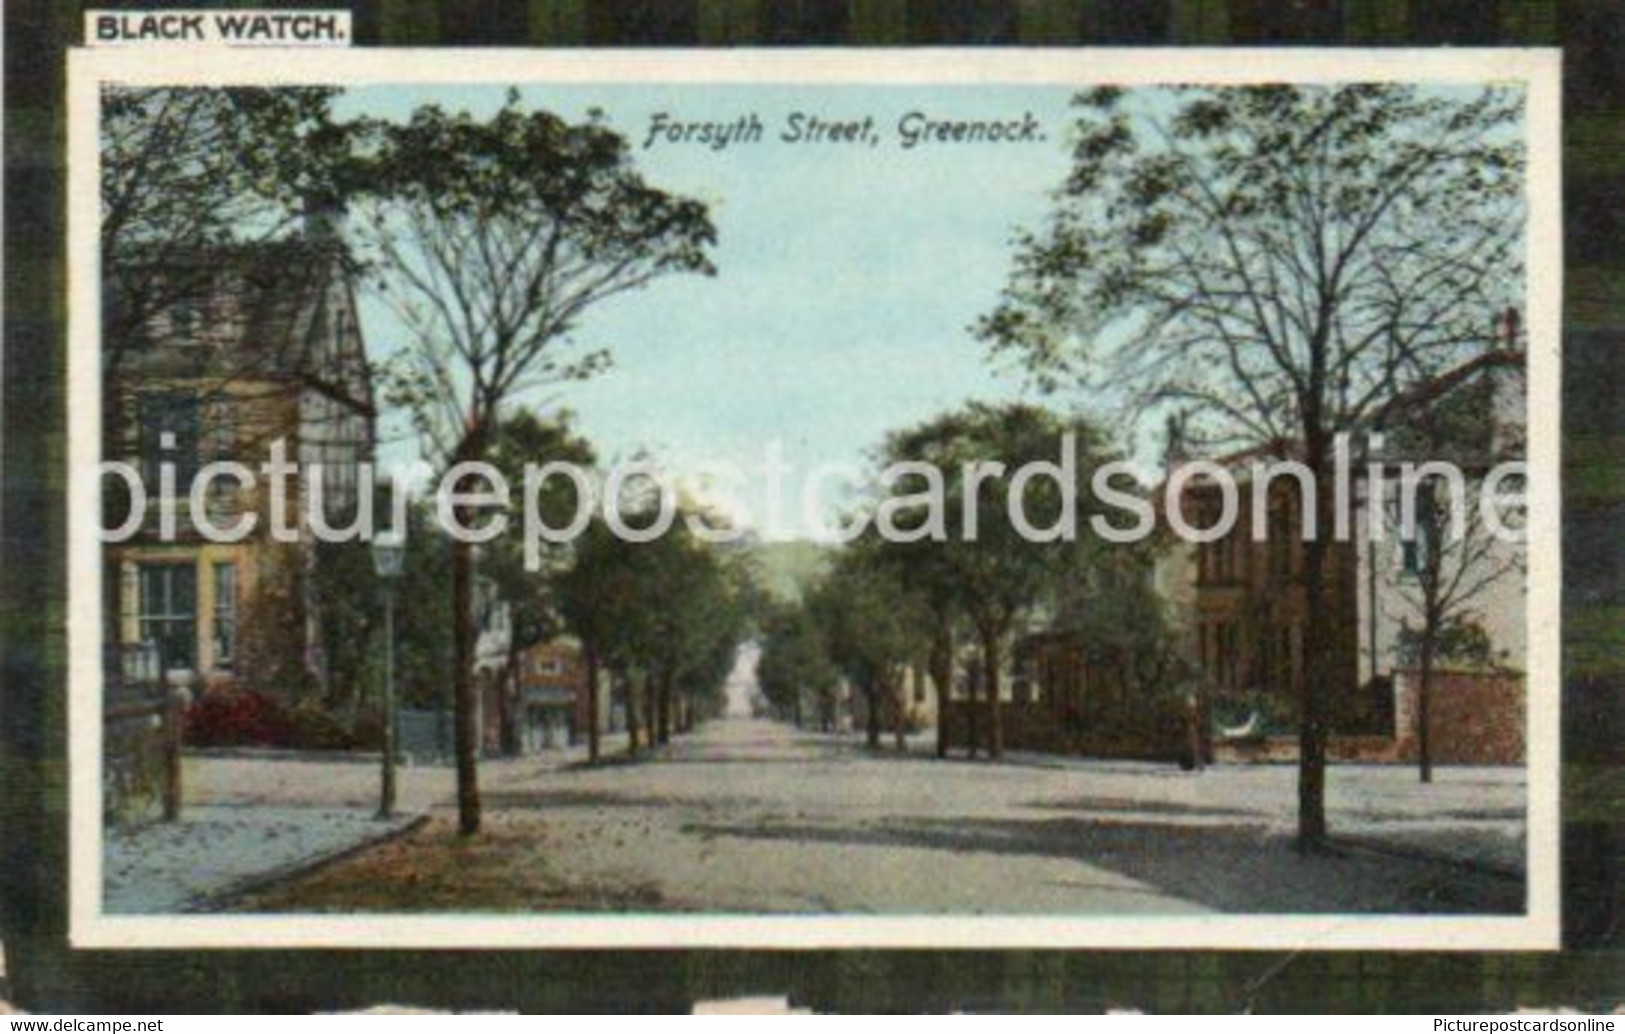 GREENOCK FORSYTH STREET OLD COLOUR TARTAN BORDERED POSTCARD BLACK WATCH SCOTLAND - Renfrewshire